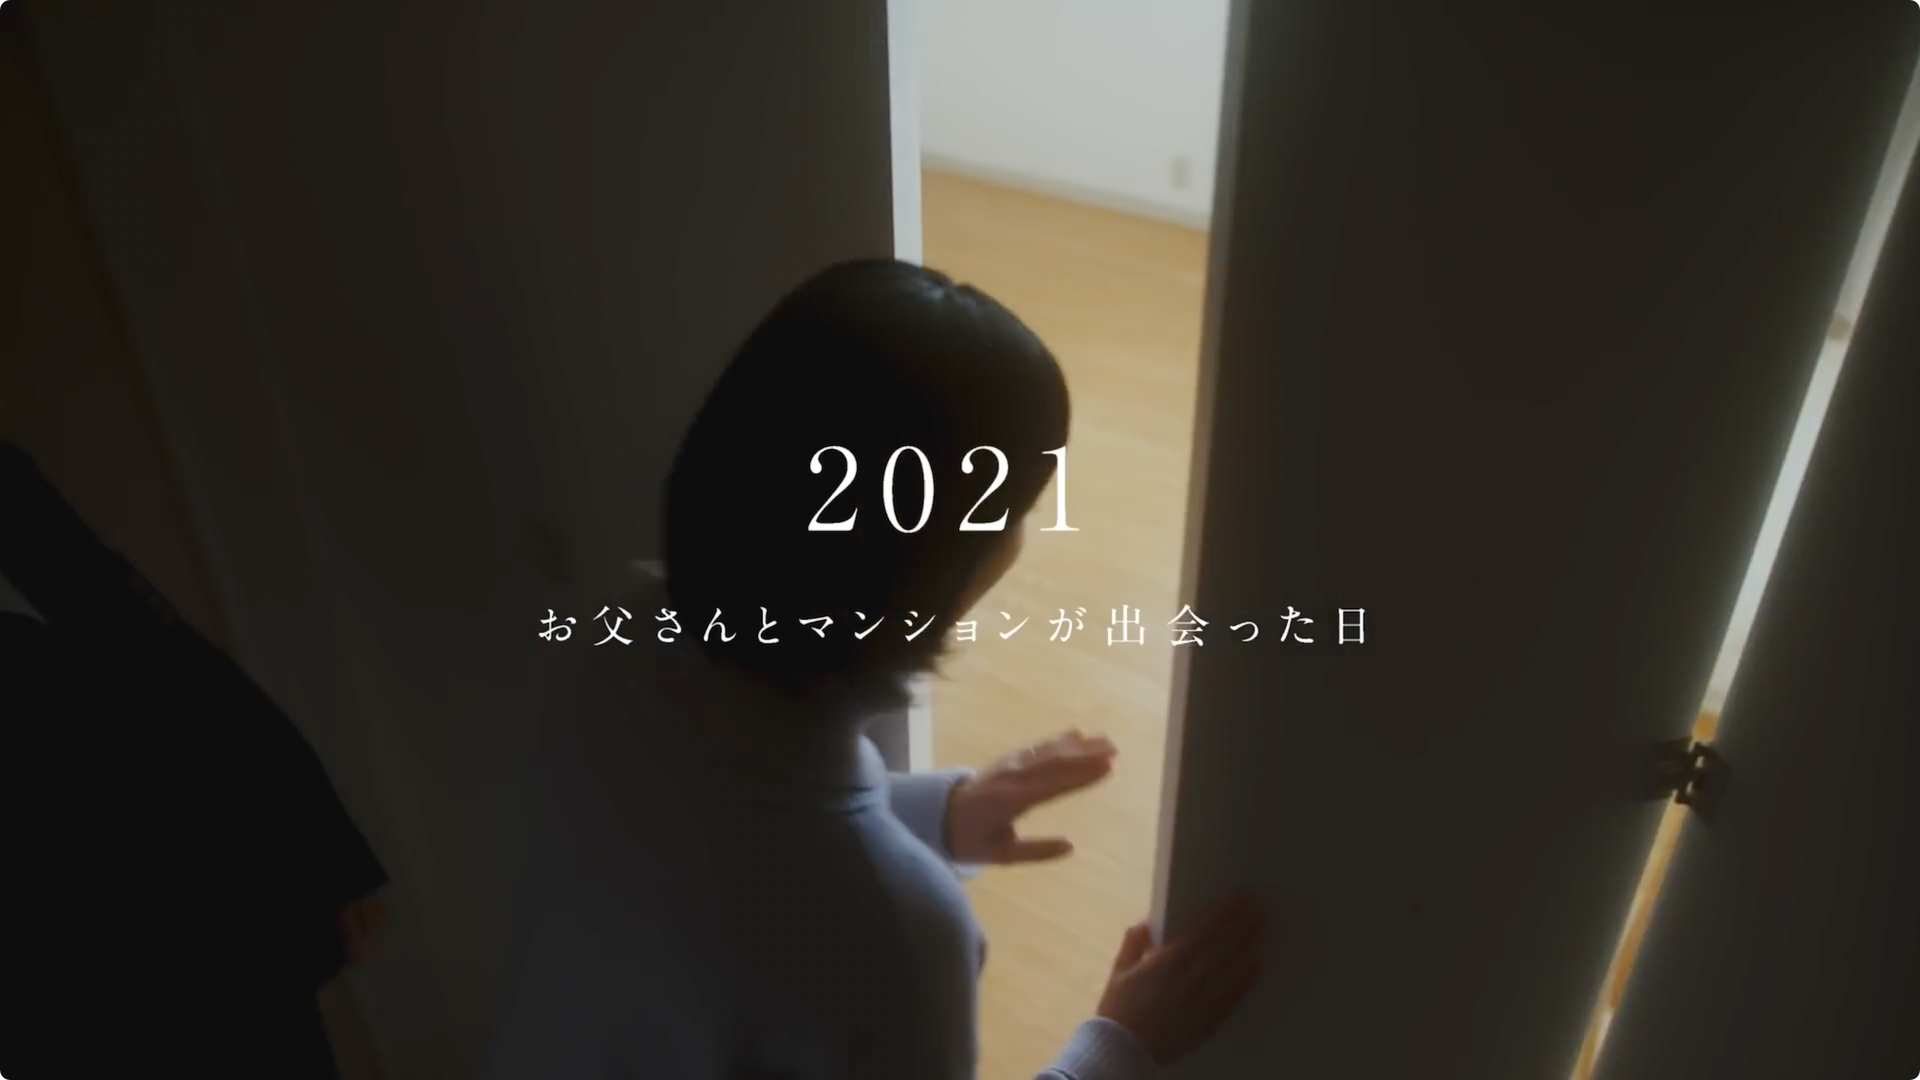 2021 Kashiwabara Brandmovie5.png